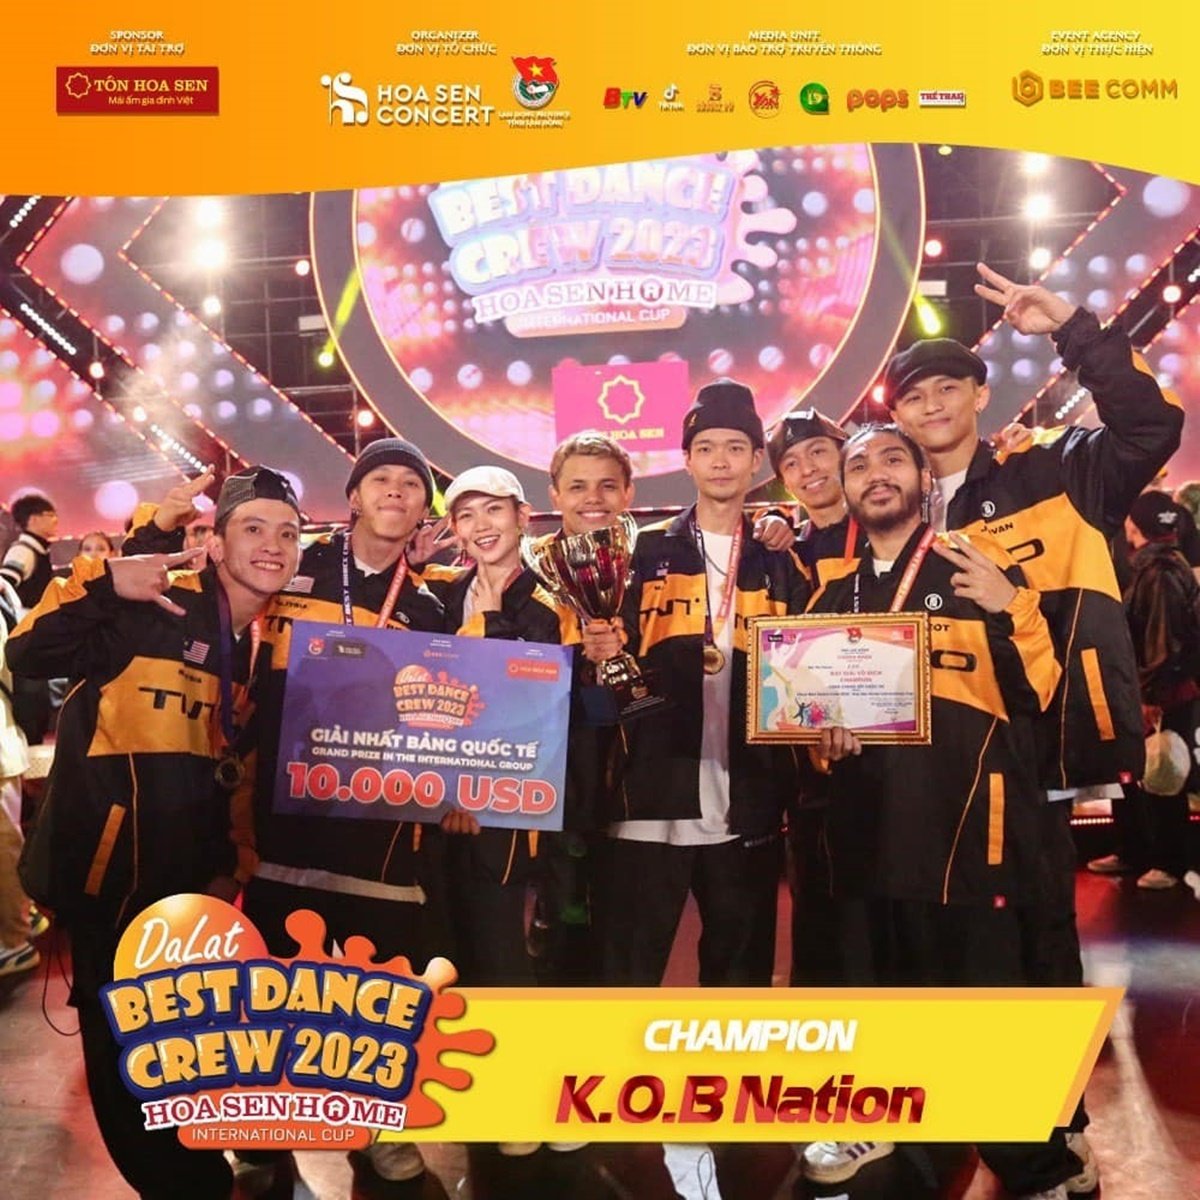 K.O.B Nation打败各国舞团，在越南大叻举行的国际舞团大赛中成功获冠。